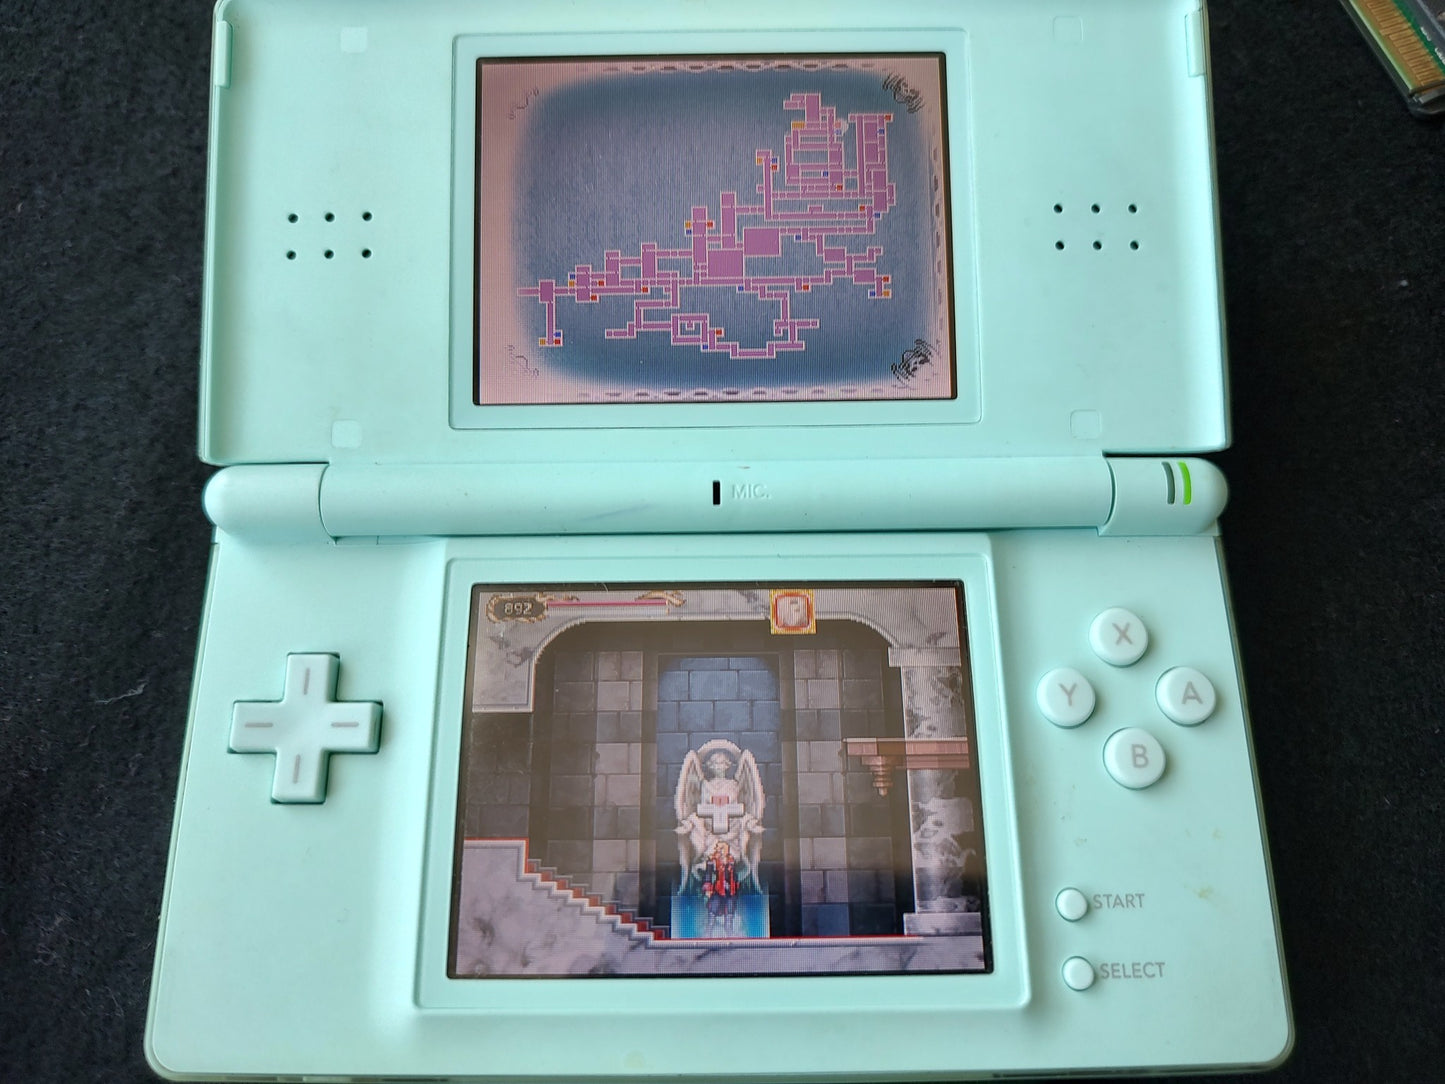 AKUMAJO DRACULA Castlevania Gallery of Labyrinth Nintendo DS Boxed set -f0816-